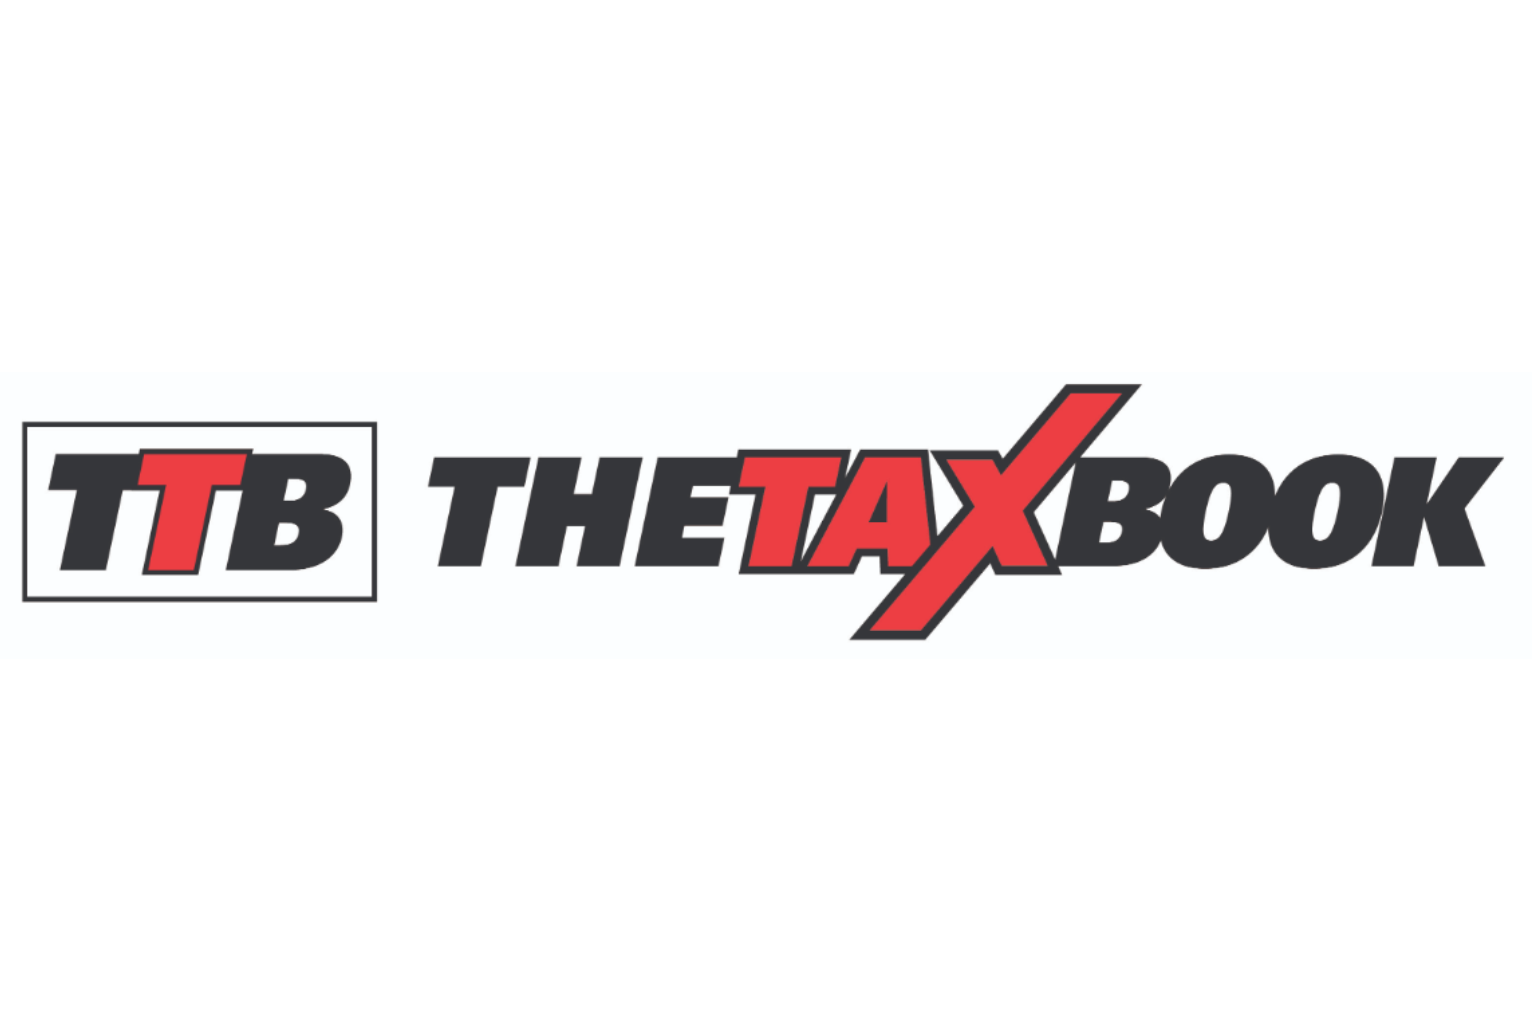 TheTaxBook logo